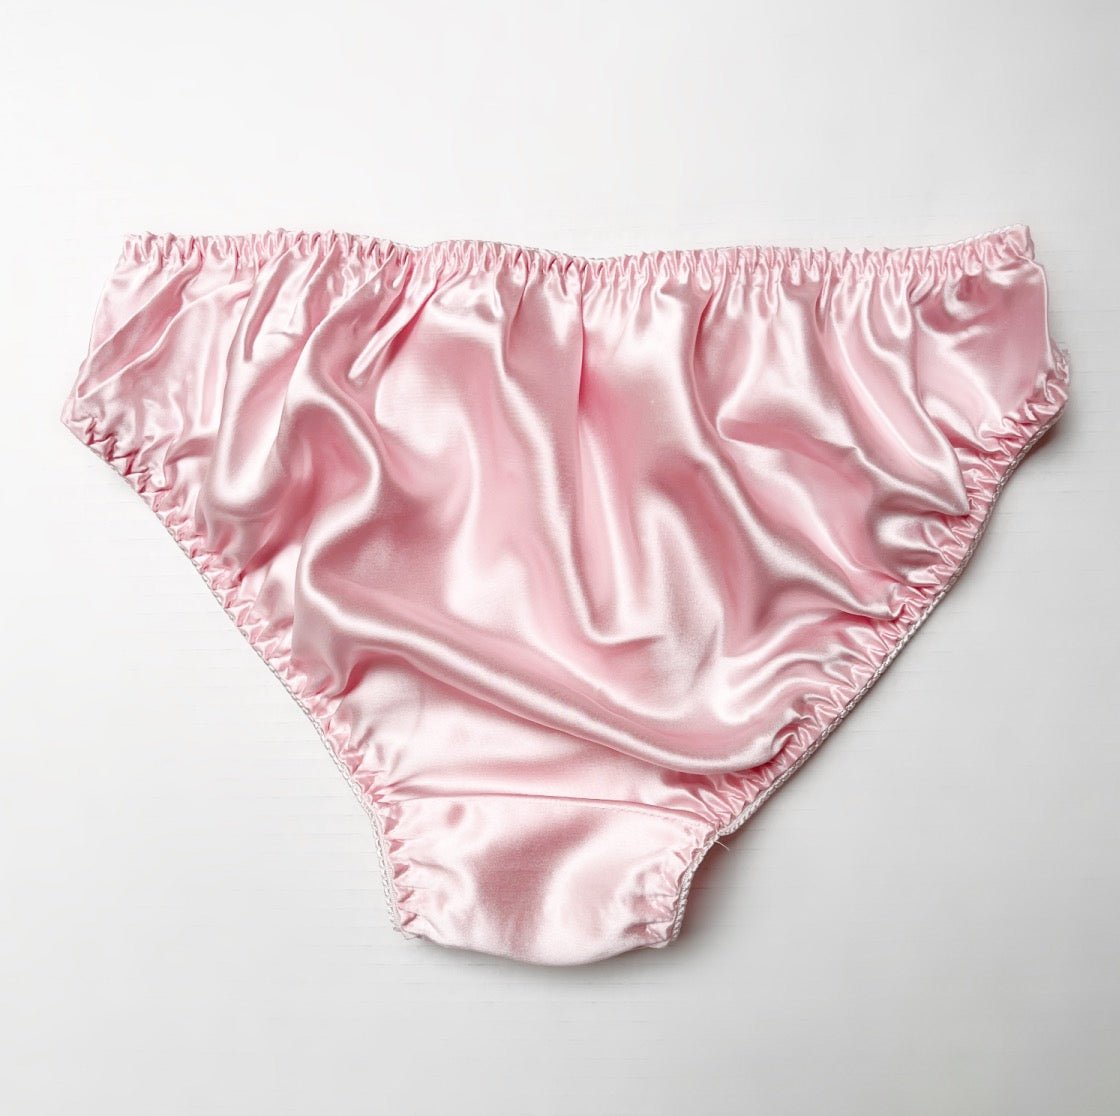 Light Pink Light Blue women's silk underwear, Made in Canada silk lingerie